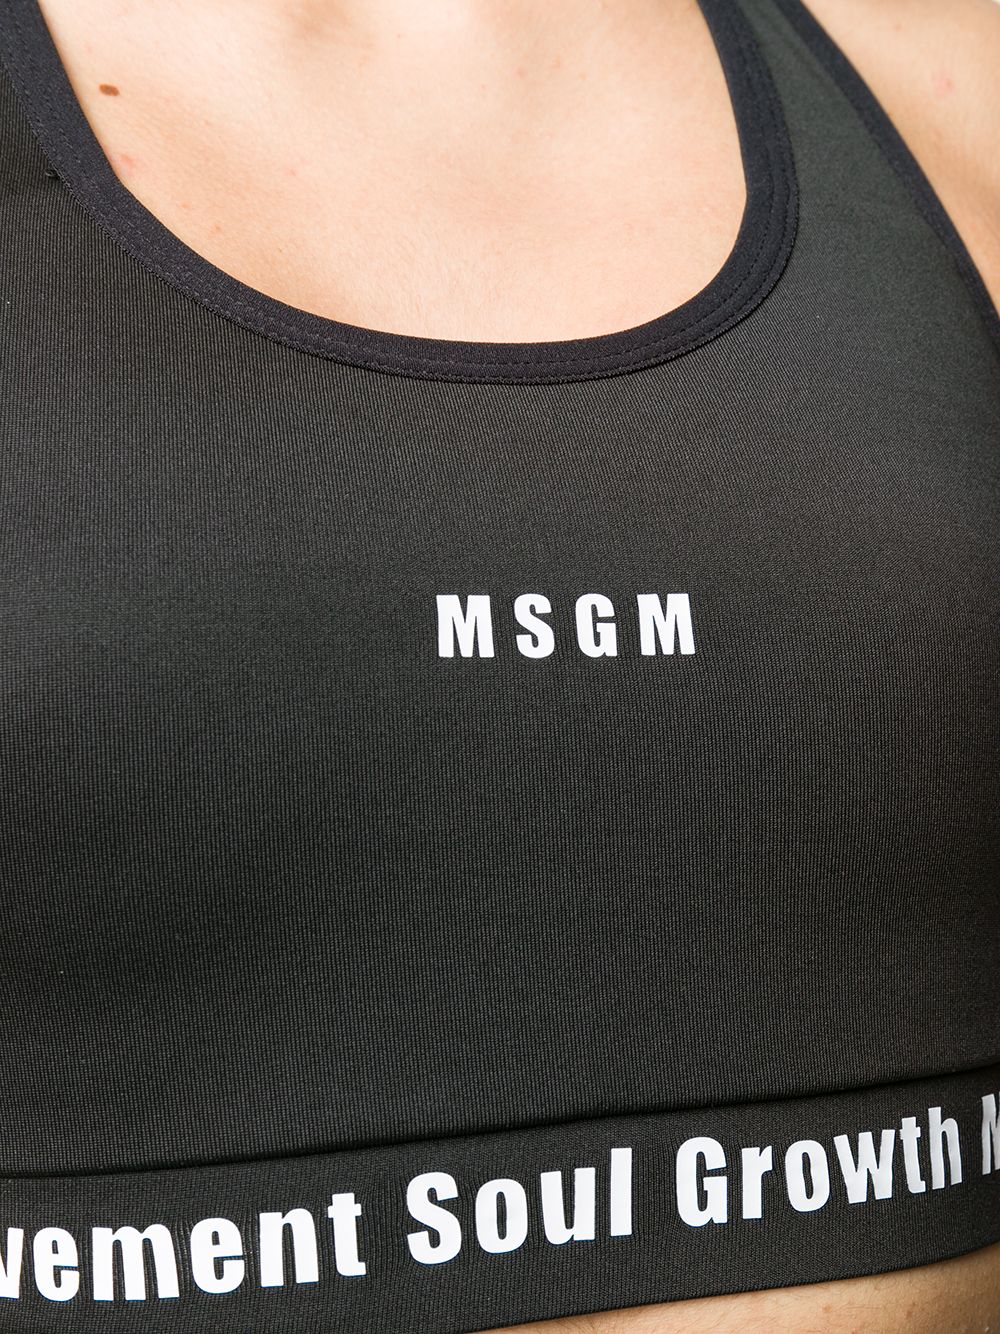 фото Msgm спортивный бюстгальтер с логотипом